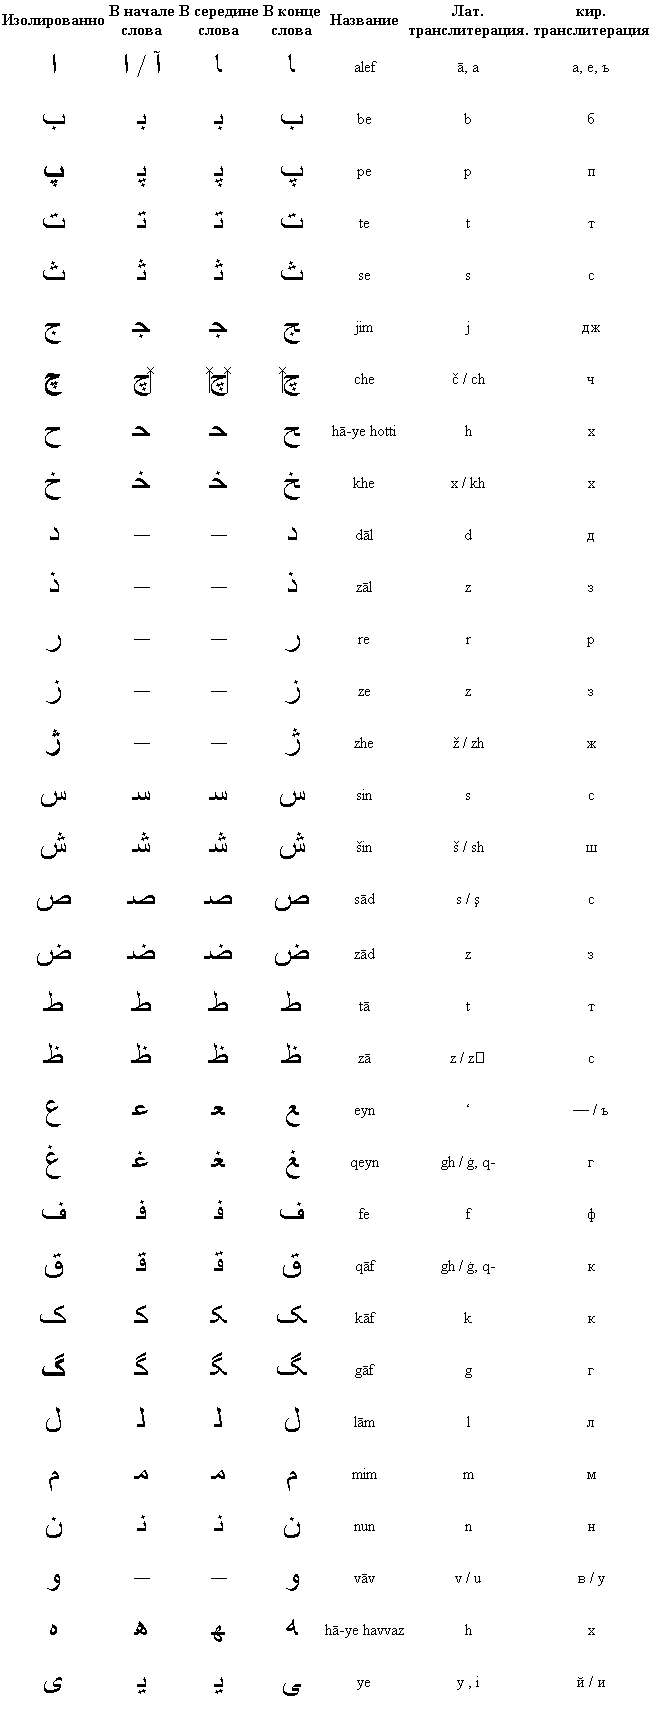 Персидский алфавит фарси. Алфавит фарси с транскрипцией. Персидский алфавит и арабский алфавит. Персидский алфавит с русской транскрипцией.